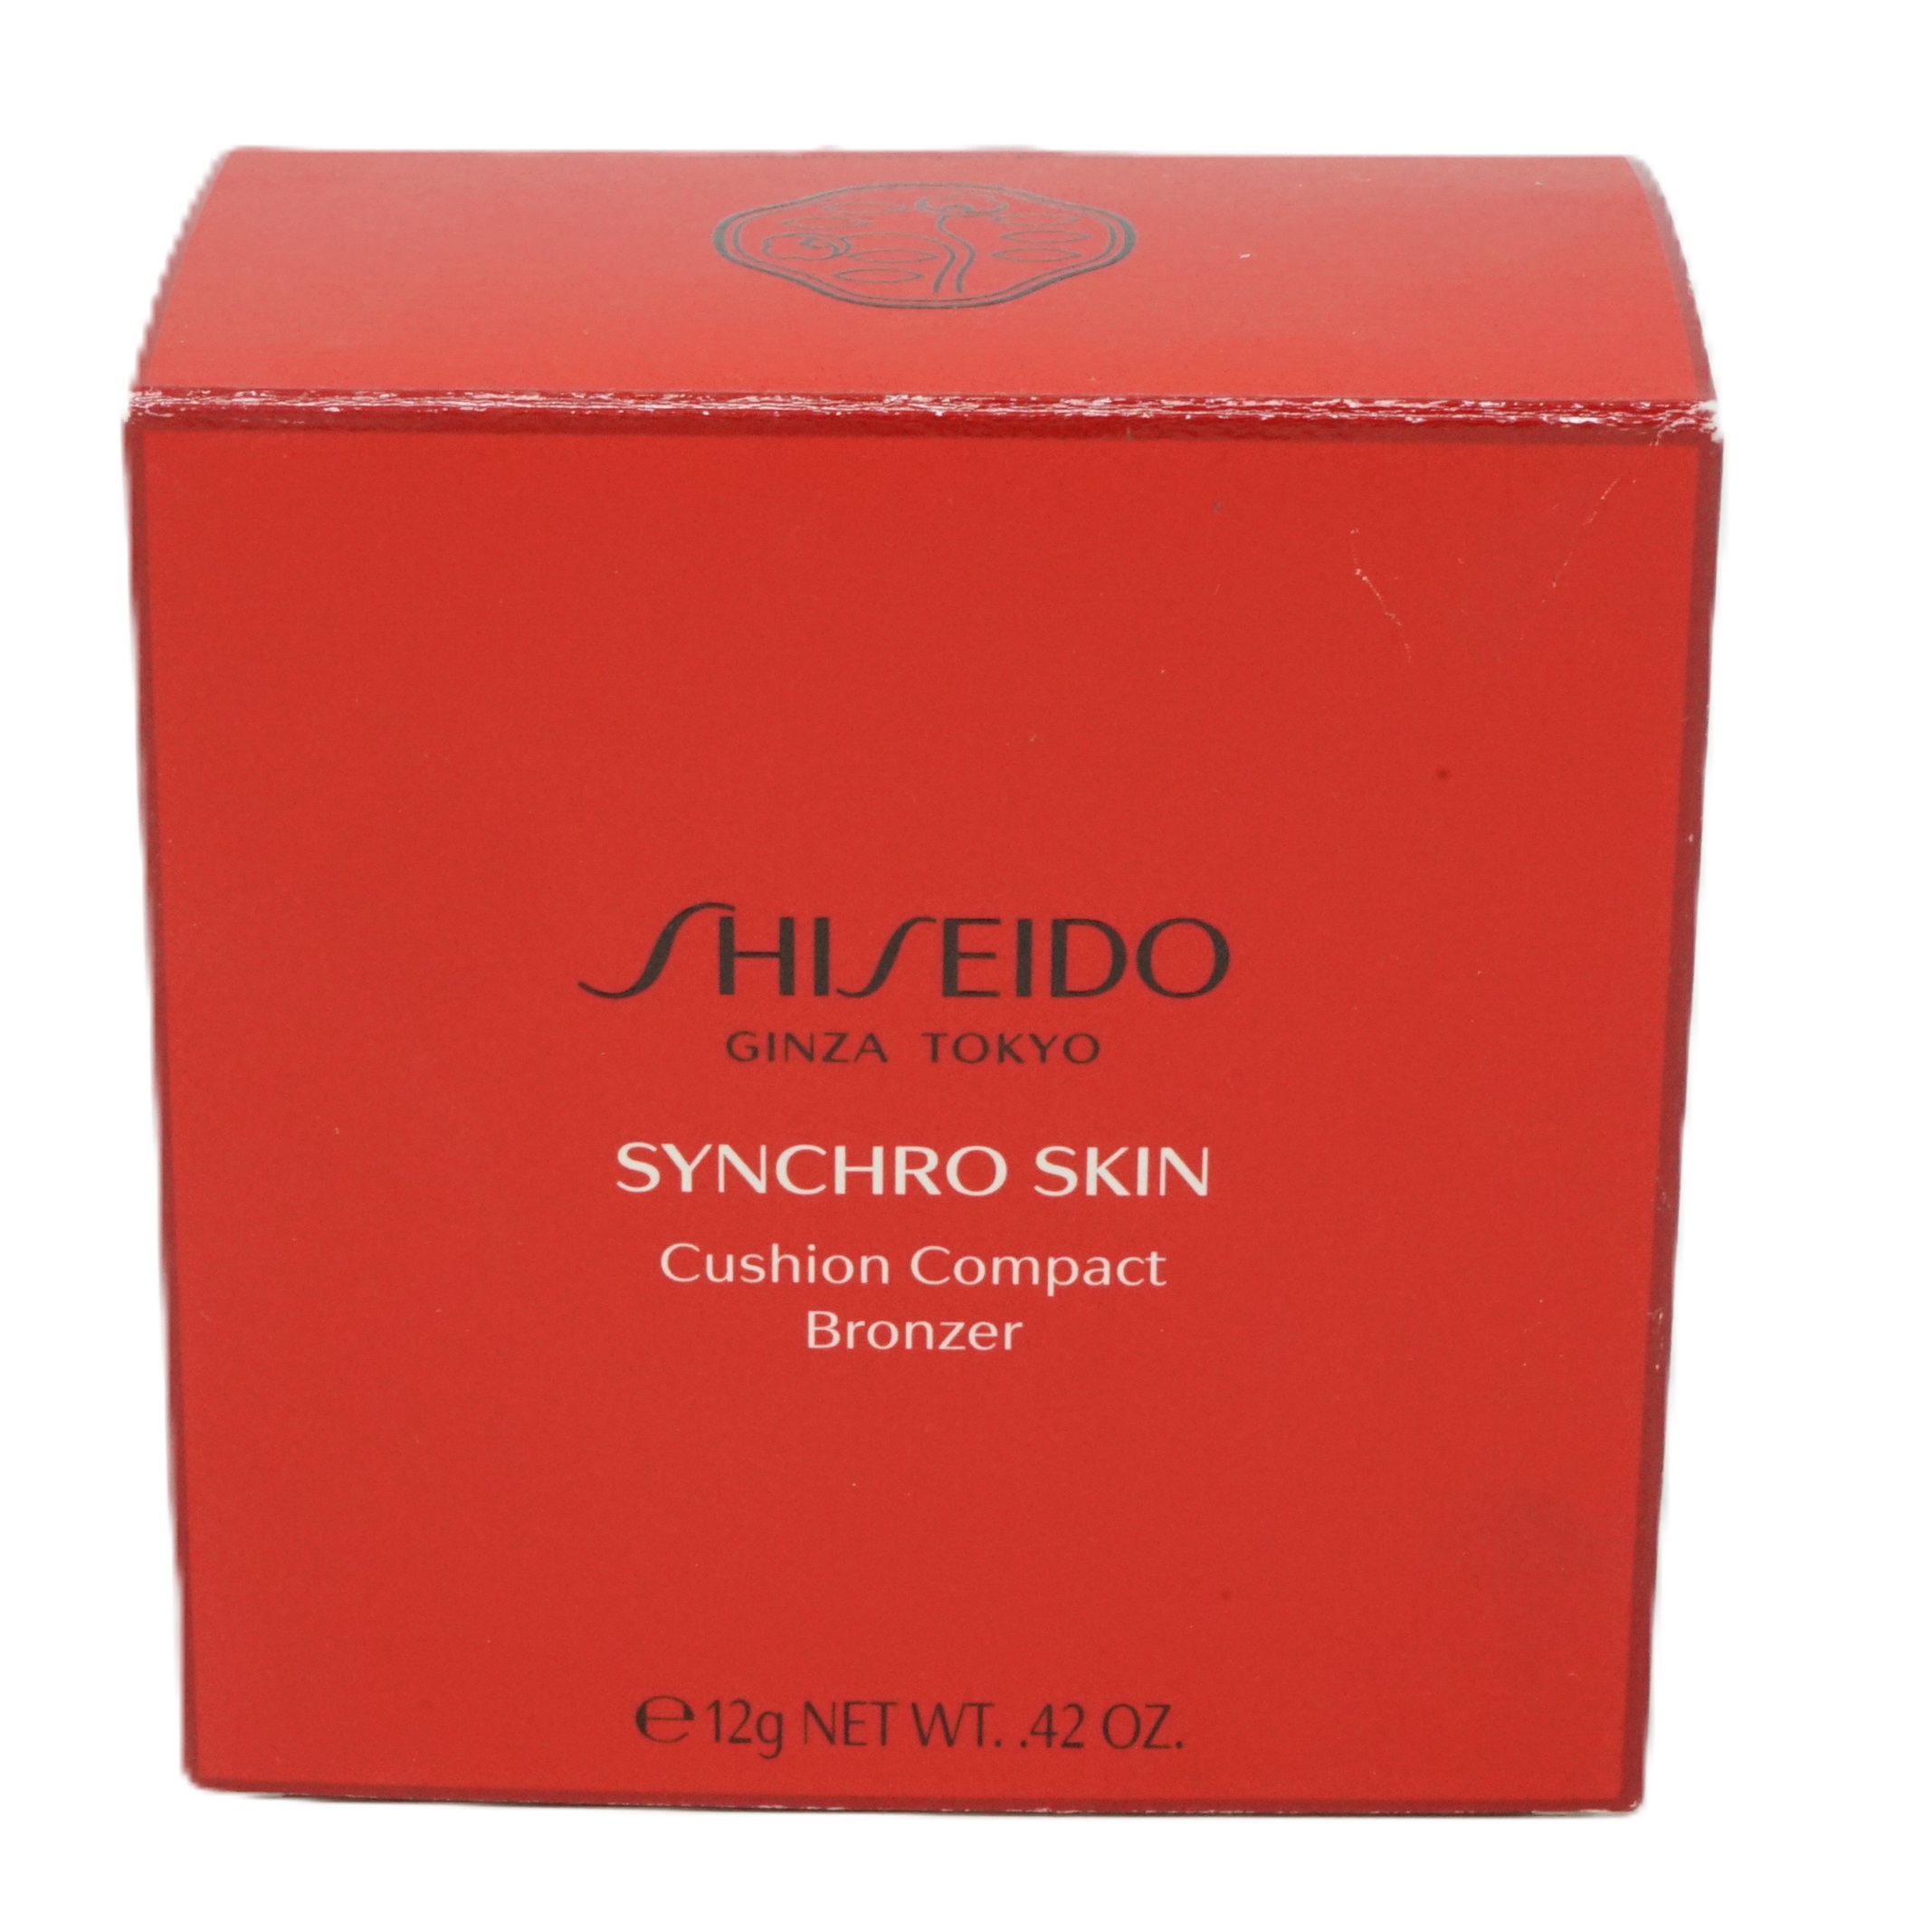 Shiseido Ginza Tokyo Synchro Skin Cushion Compact Bronzer 12g